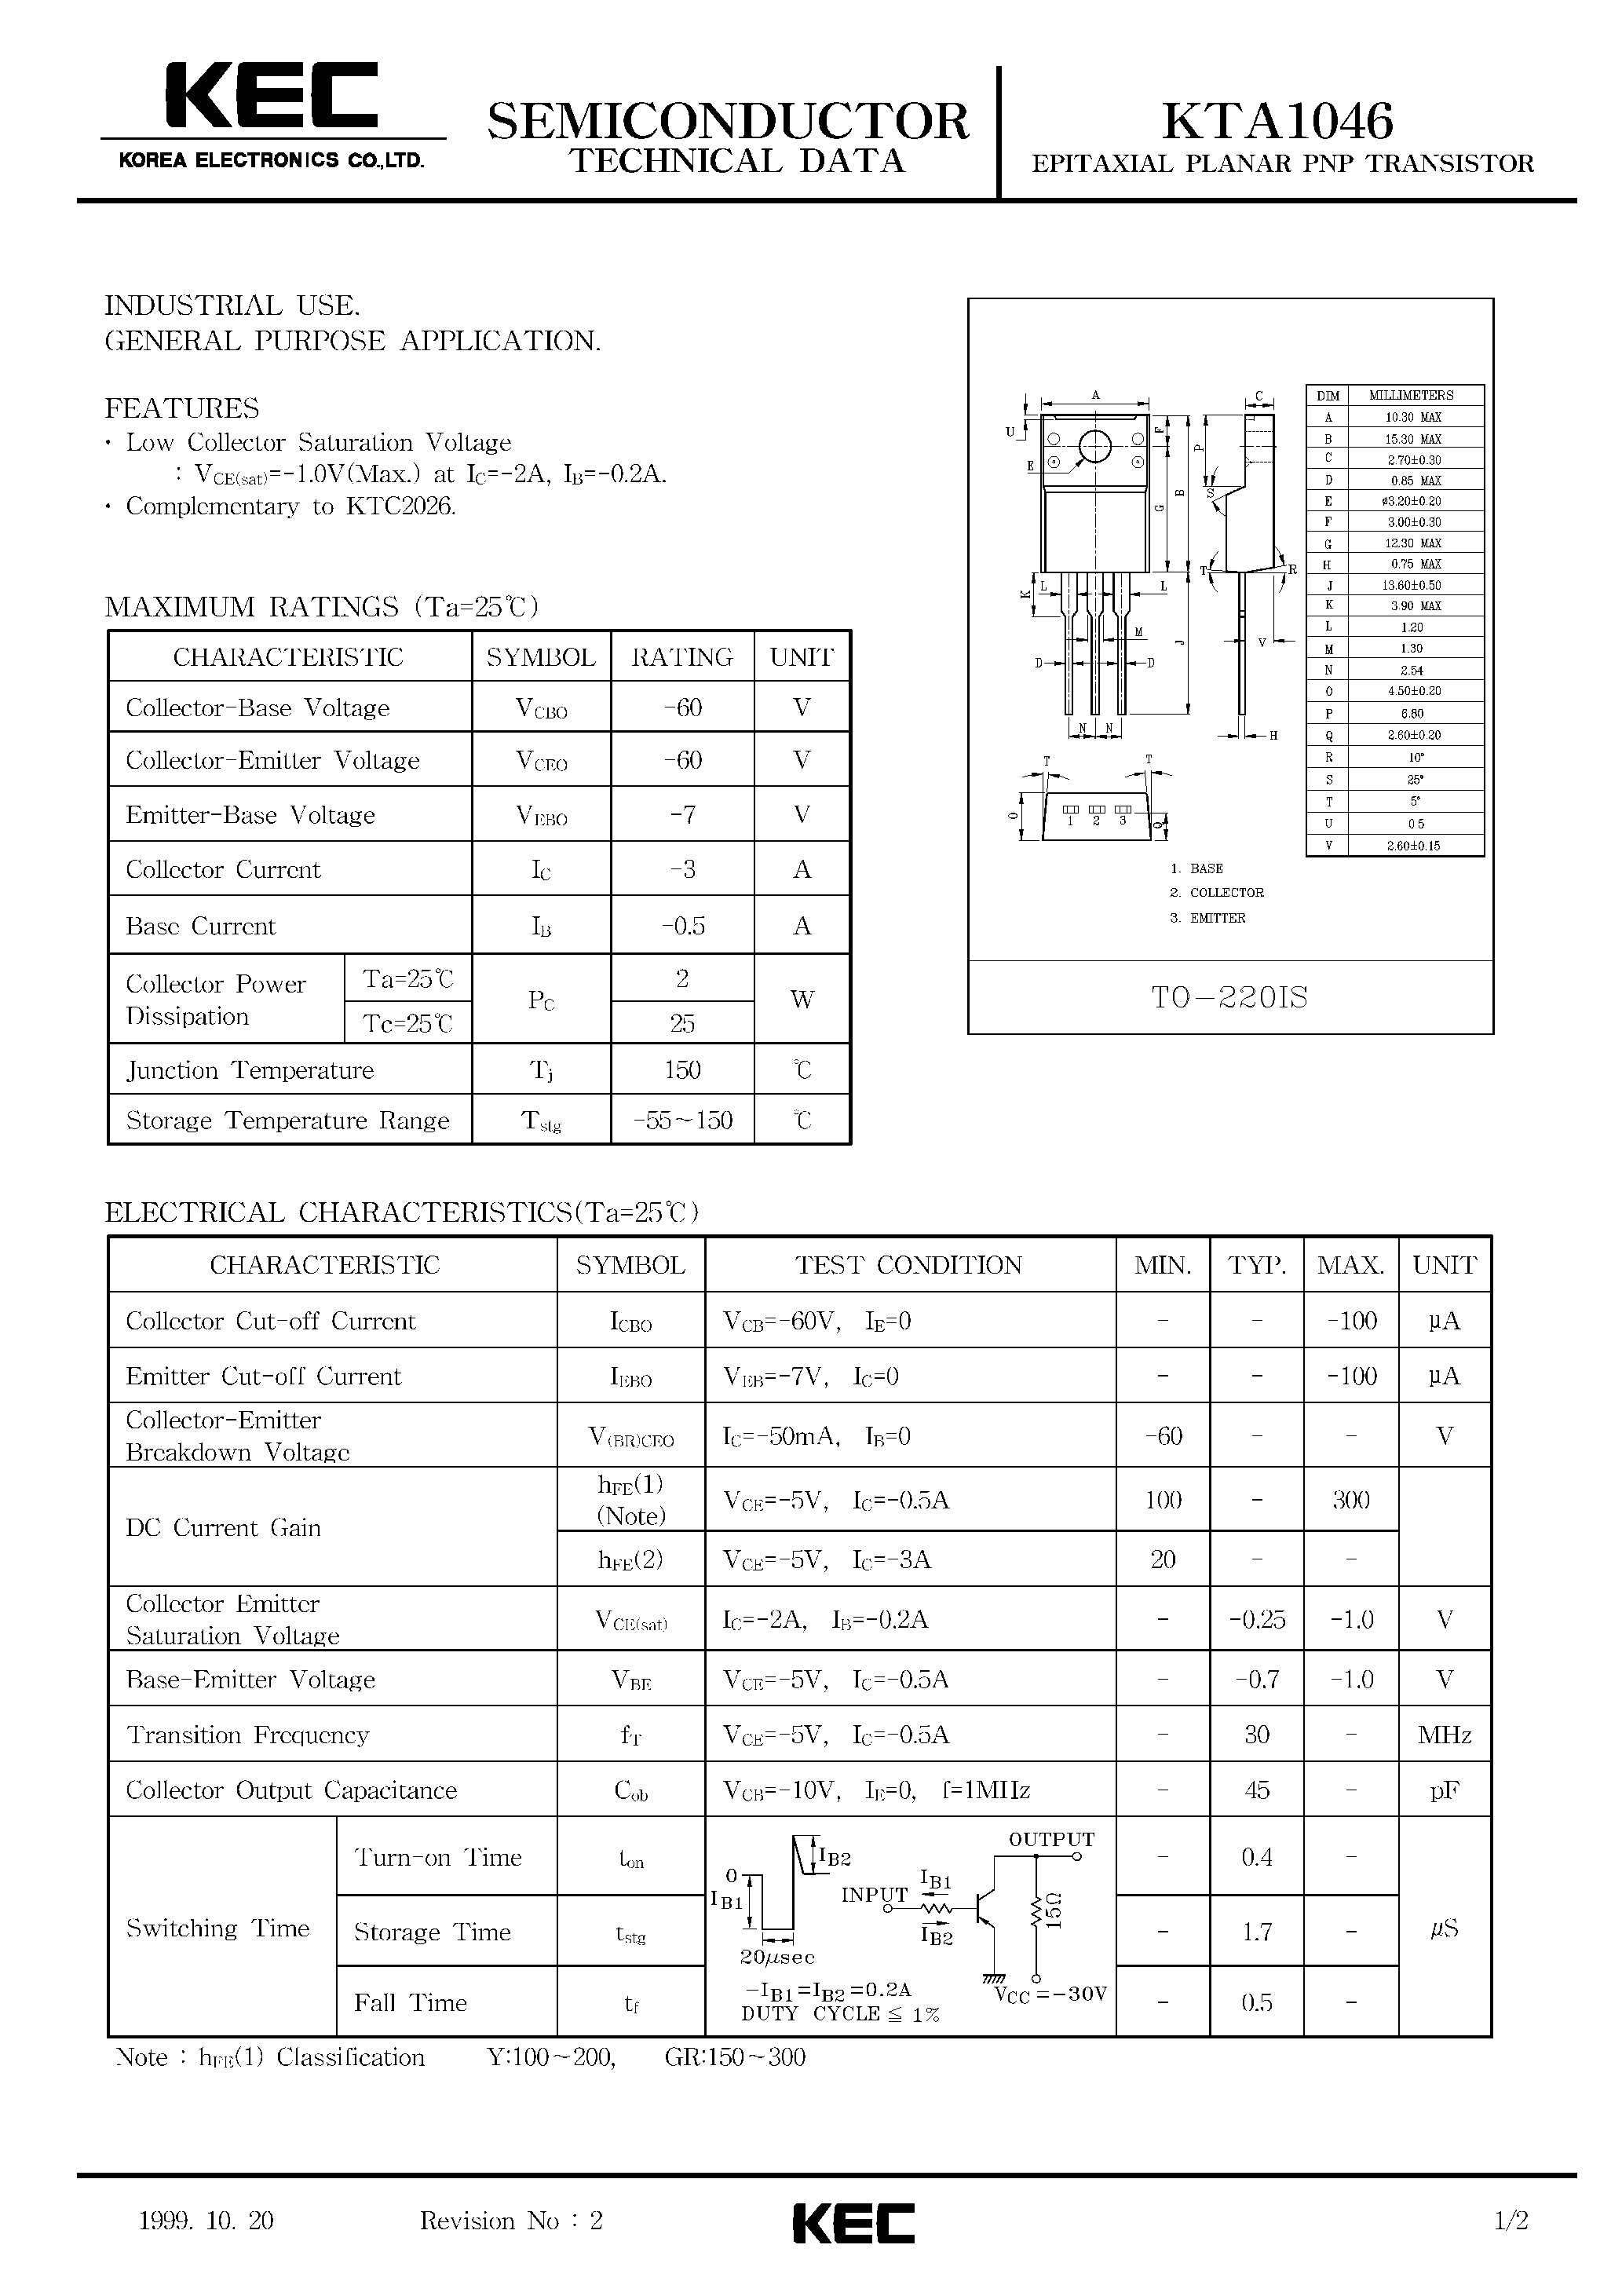 Datasheet KTA1046 - EPITAXIAL PLANAR PNP TRANSISTOR (INDUSTRIAL USE/ GENERAL PURPOSE) page 1